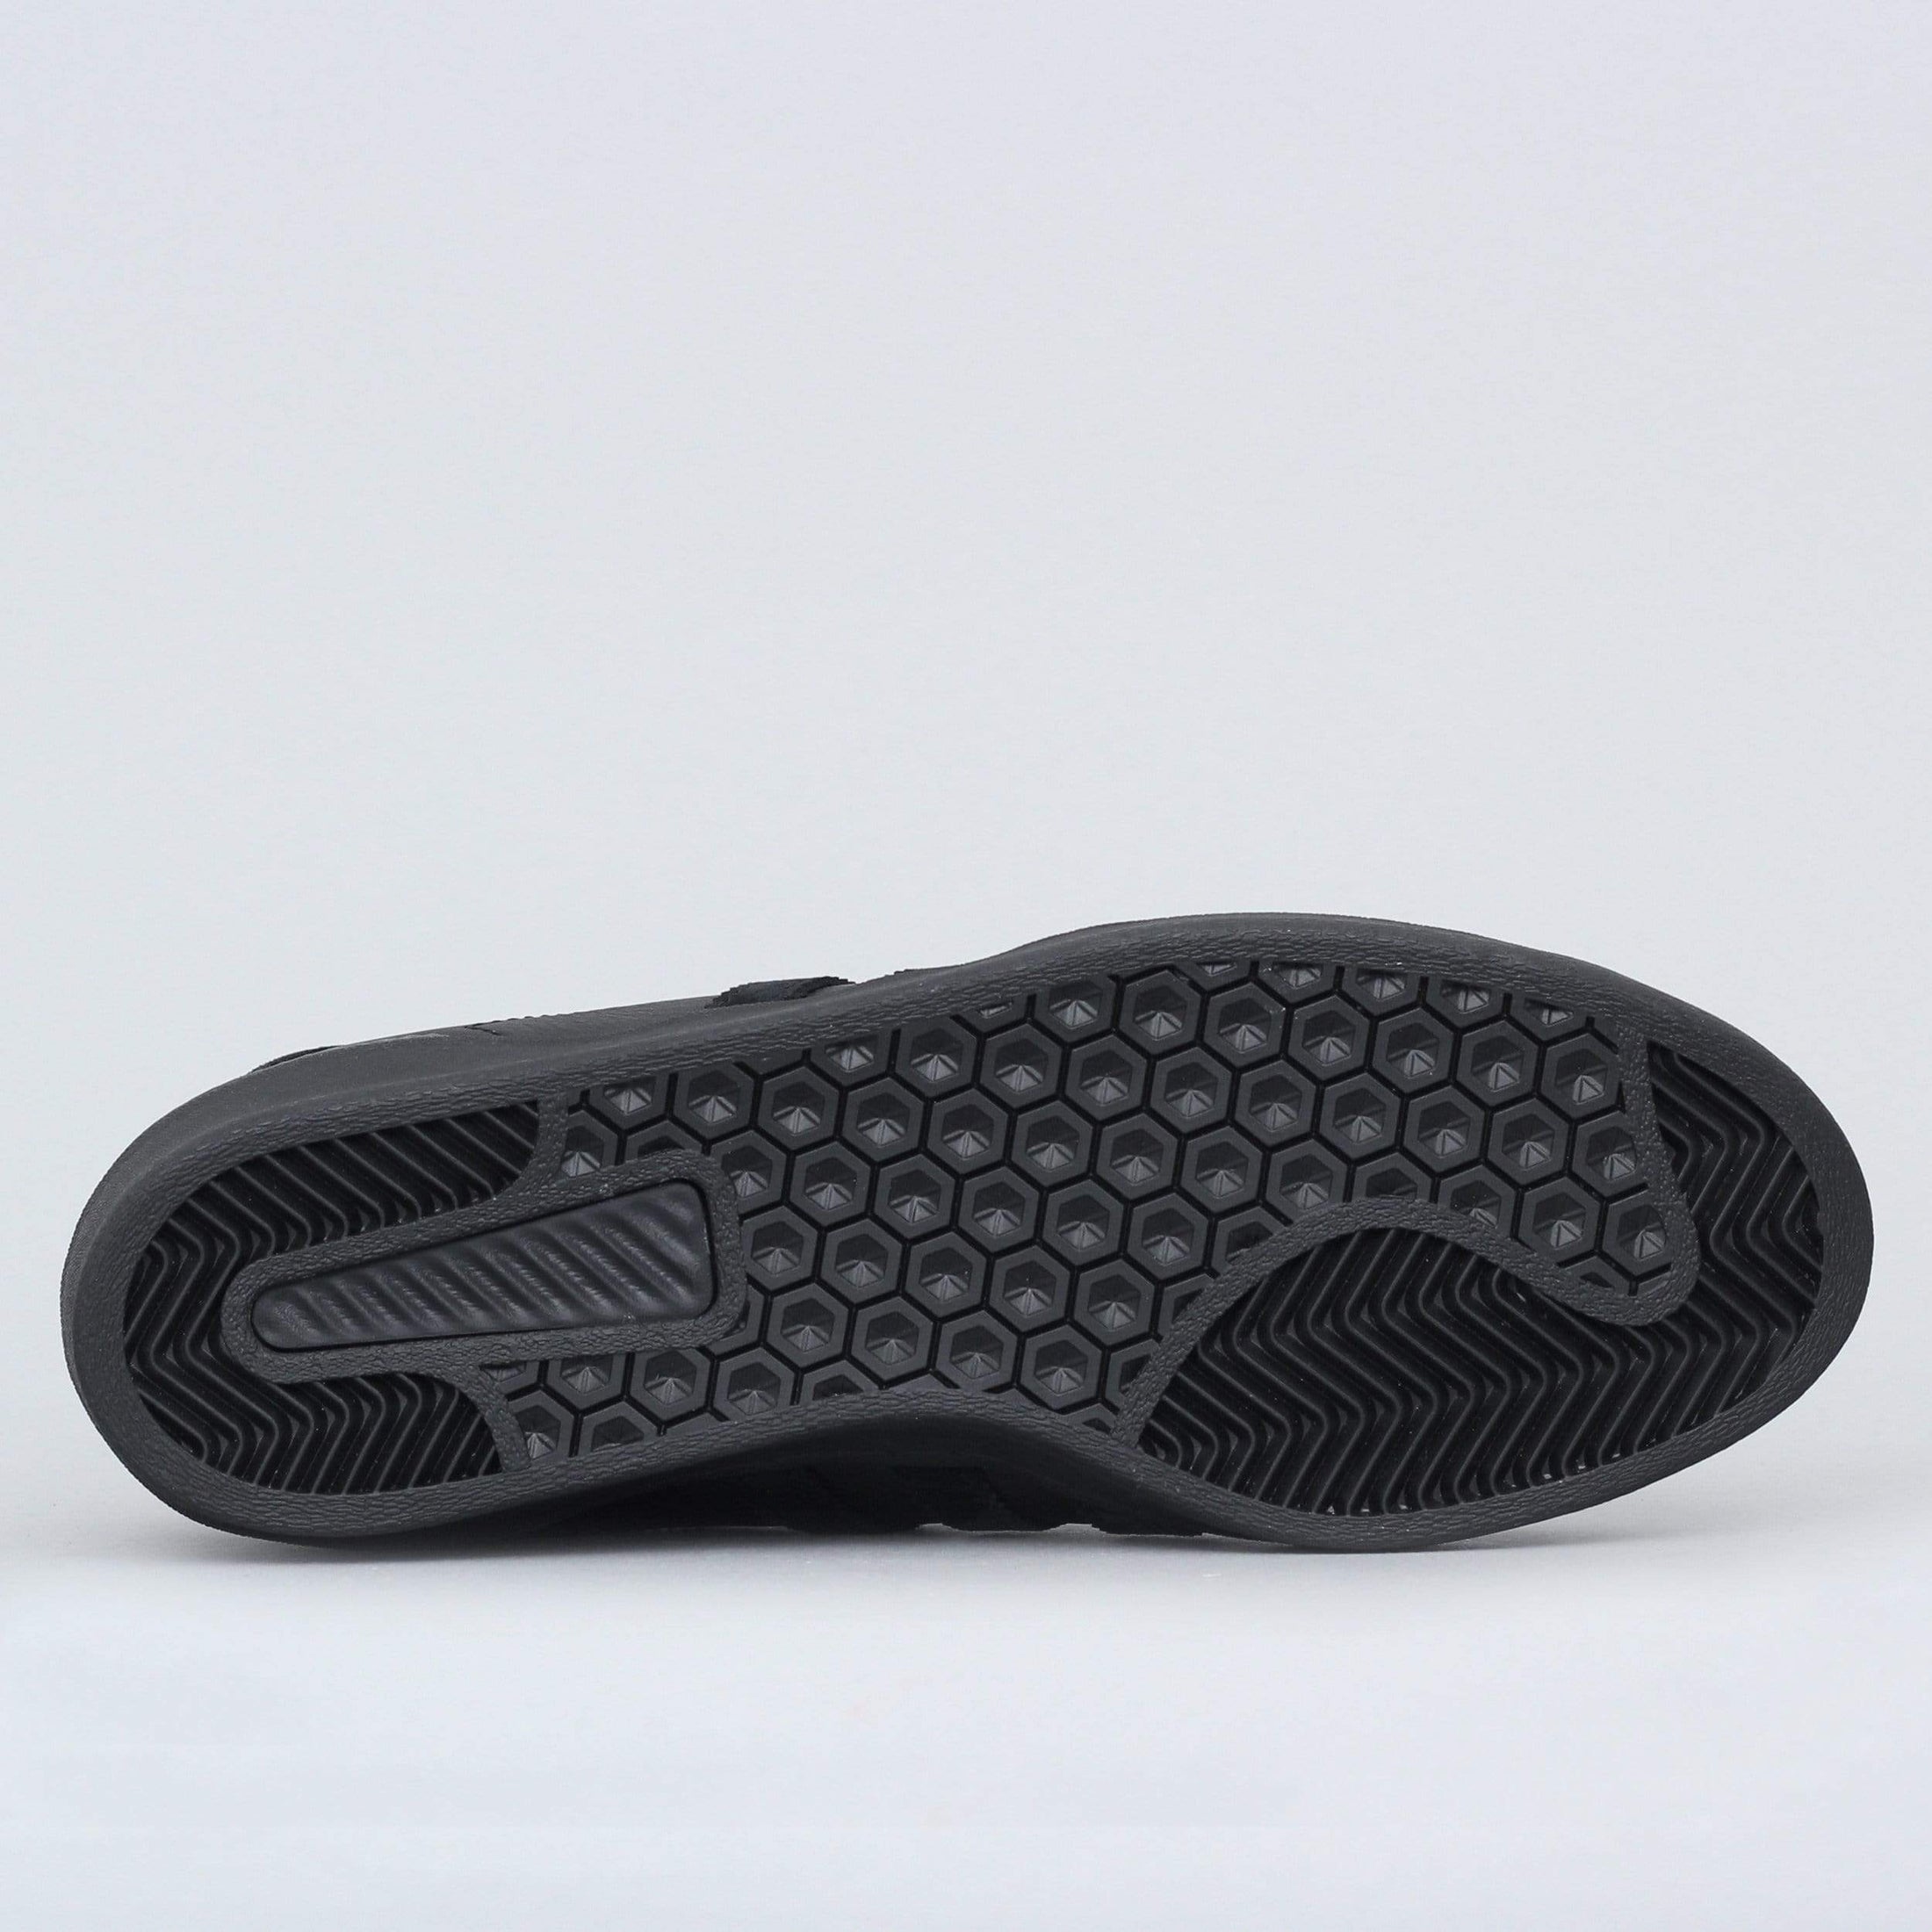 adidas Campus Adv x Silas Shoes Core Black / Core Black / Pale Nude